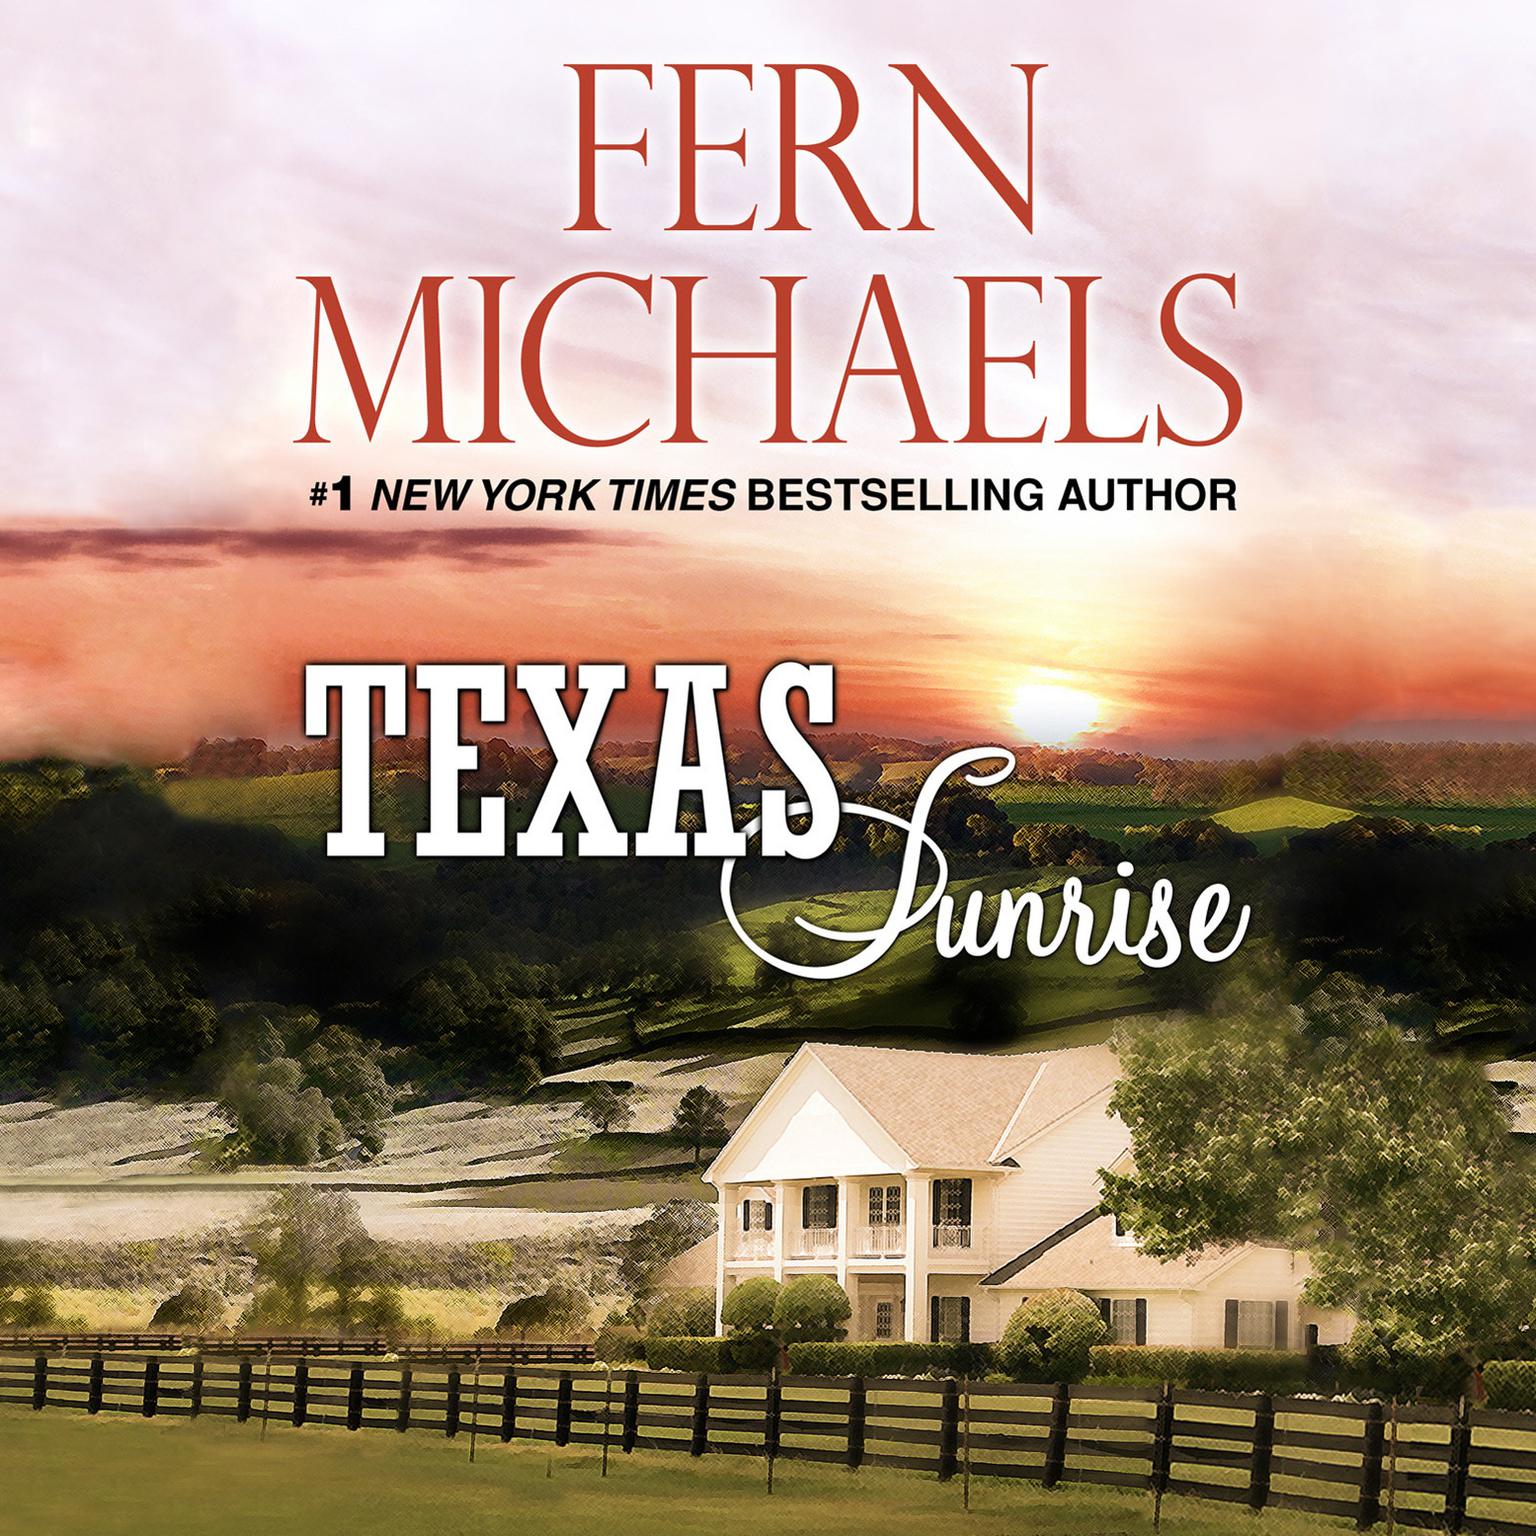 Texas Sunrise Audiobook, by Fern Michaels